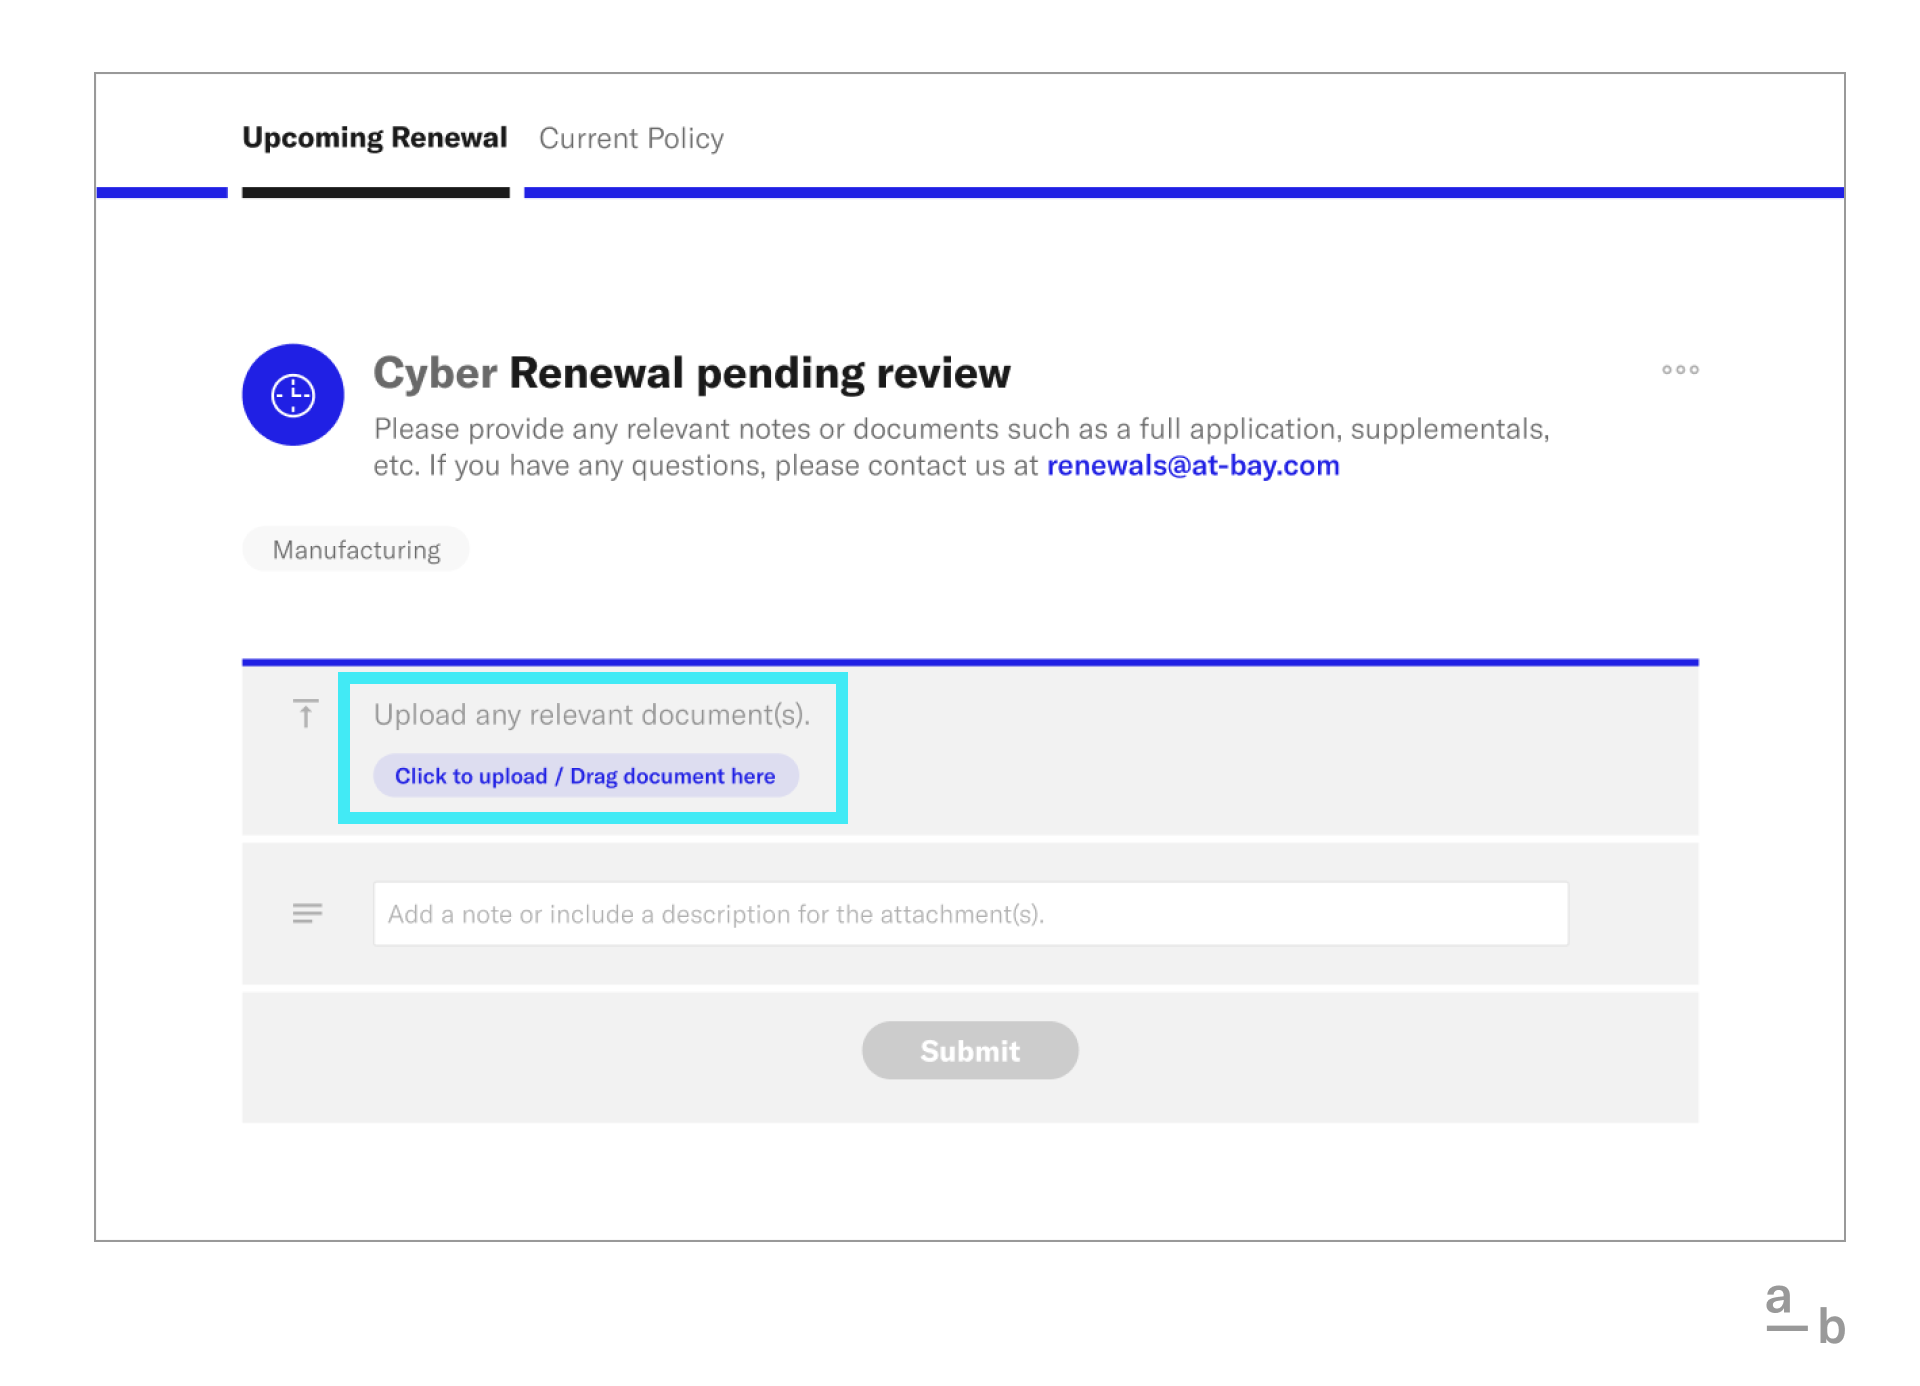 Screenshot of cyber insurance renewal pending review in Broker Platform